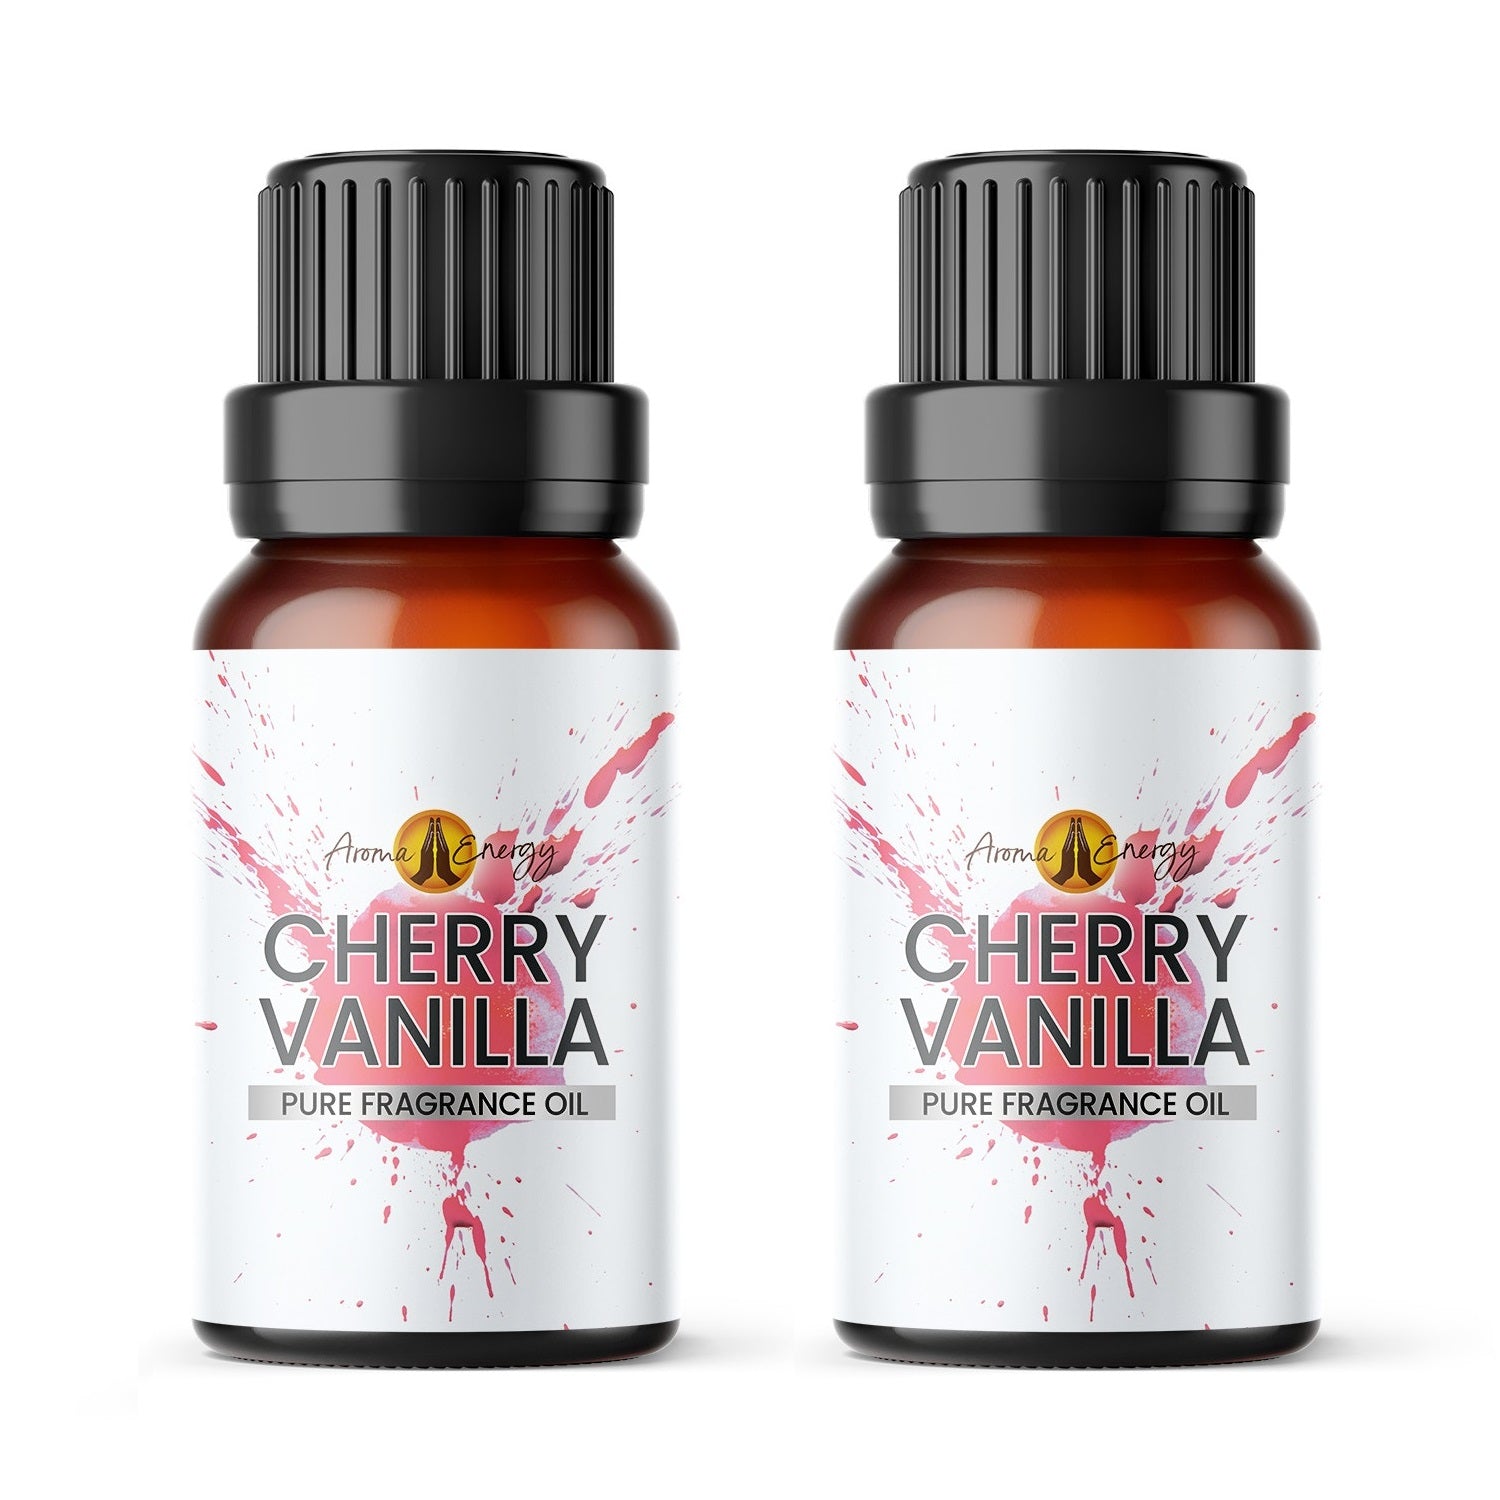 Cherry Vanilla Fragrance Oil - Aroma Energy